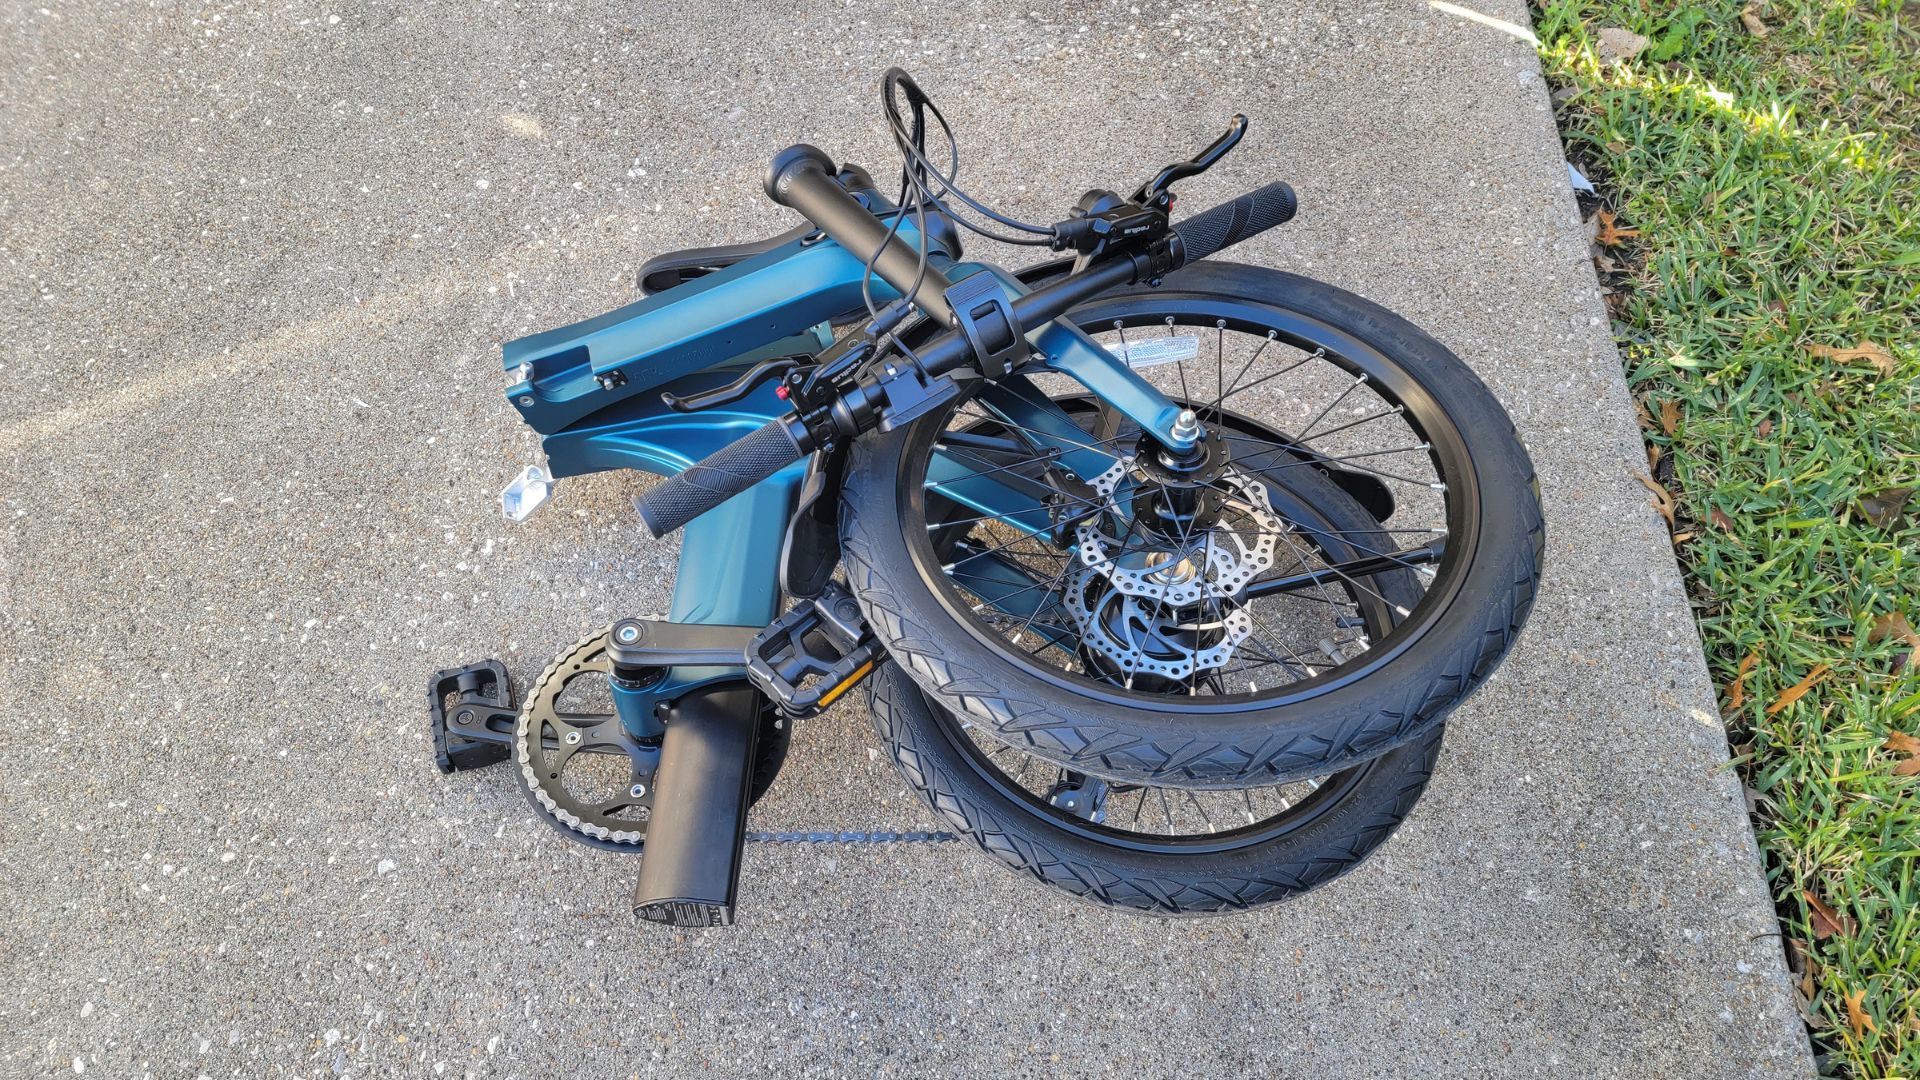 fiido x e-bike folded and laid down